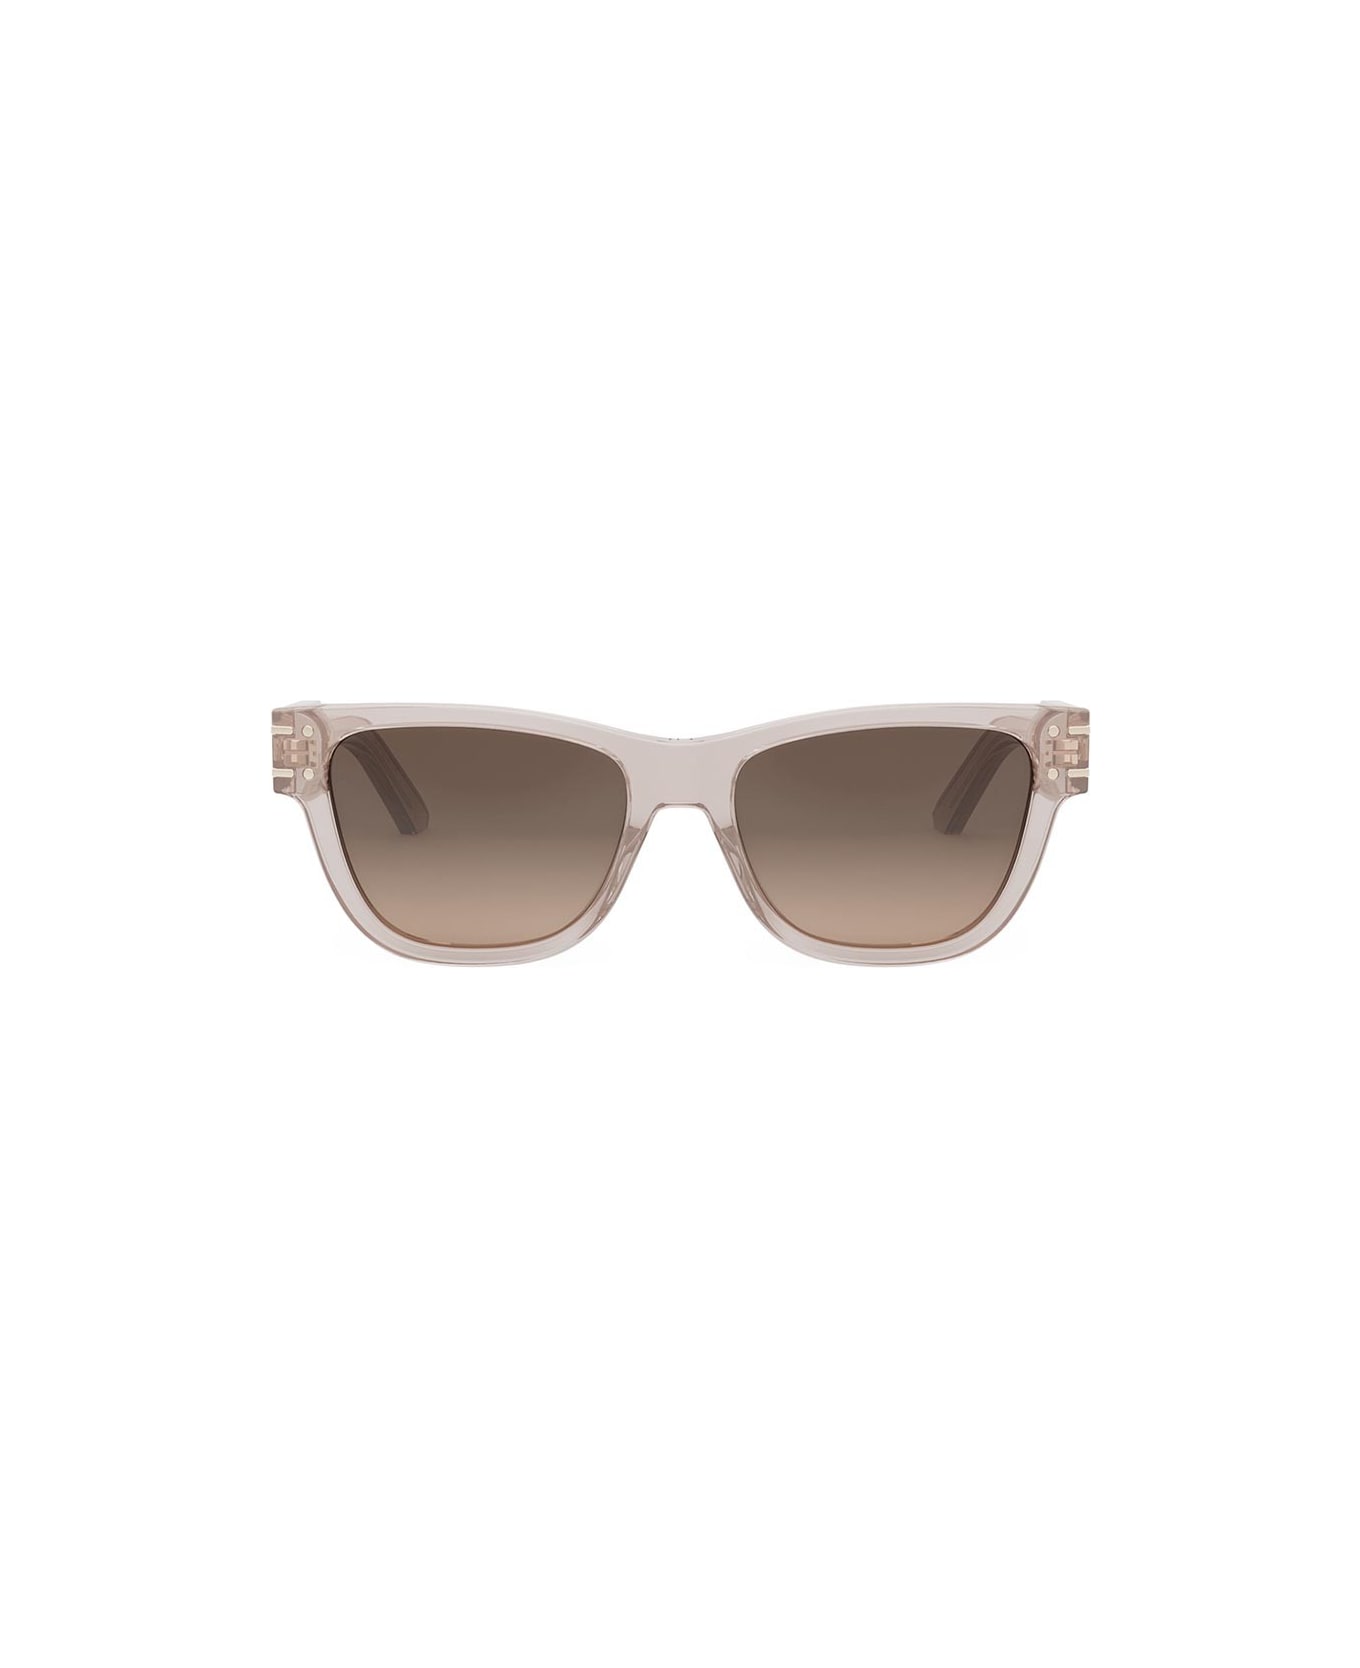 Dior Eyewear Sunglasses - Rosa trasparente/Marrone サングラス